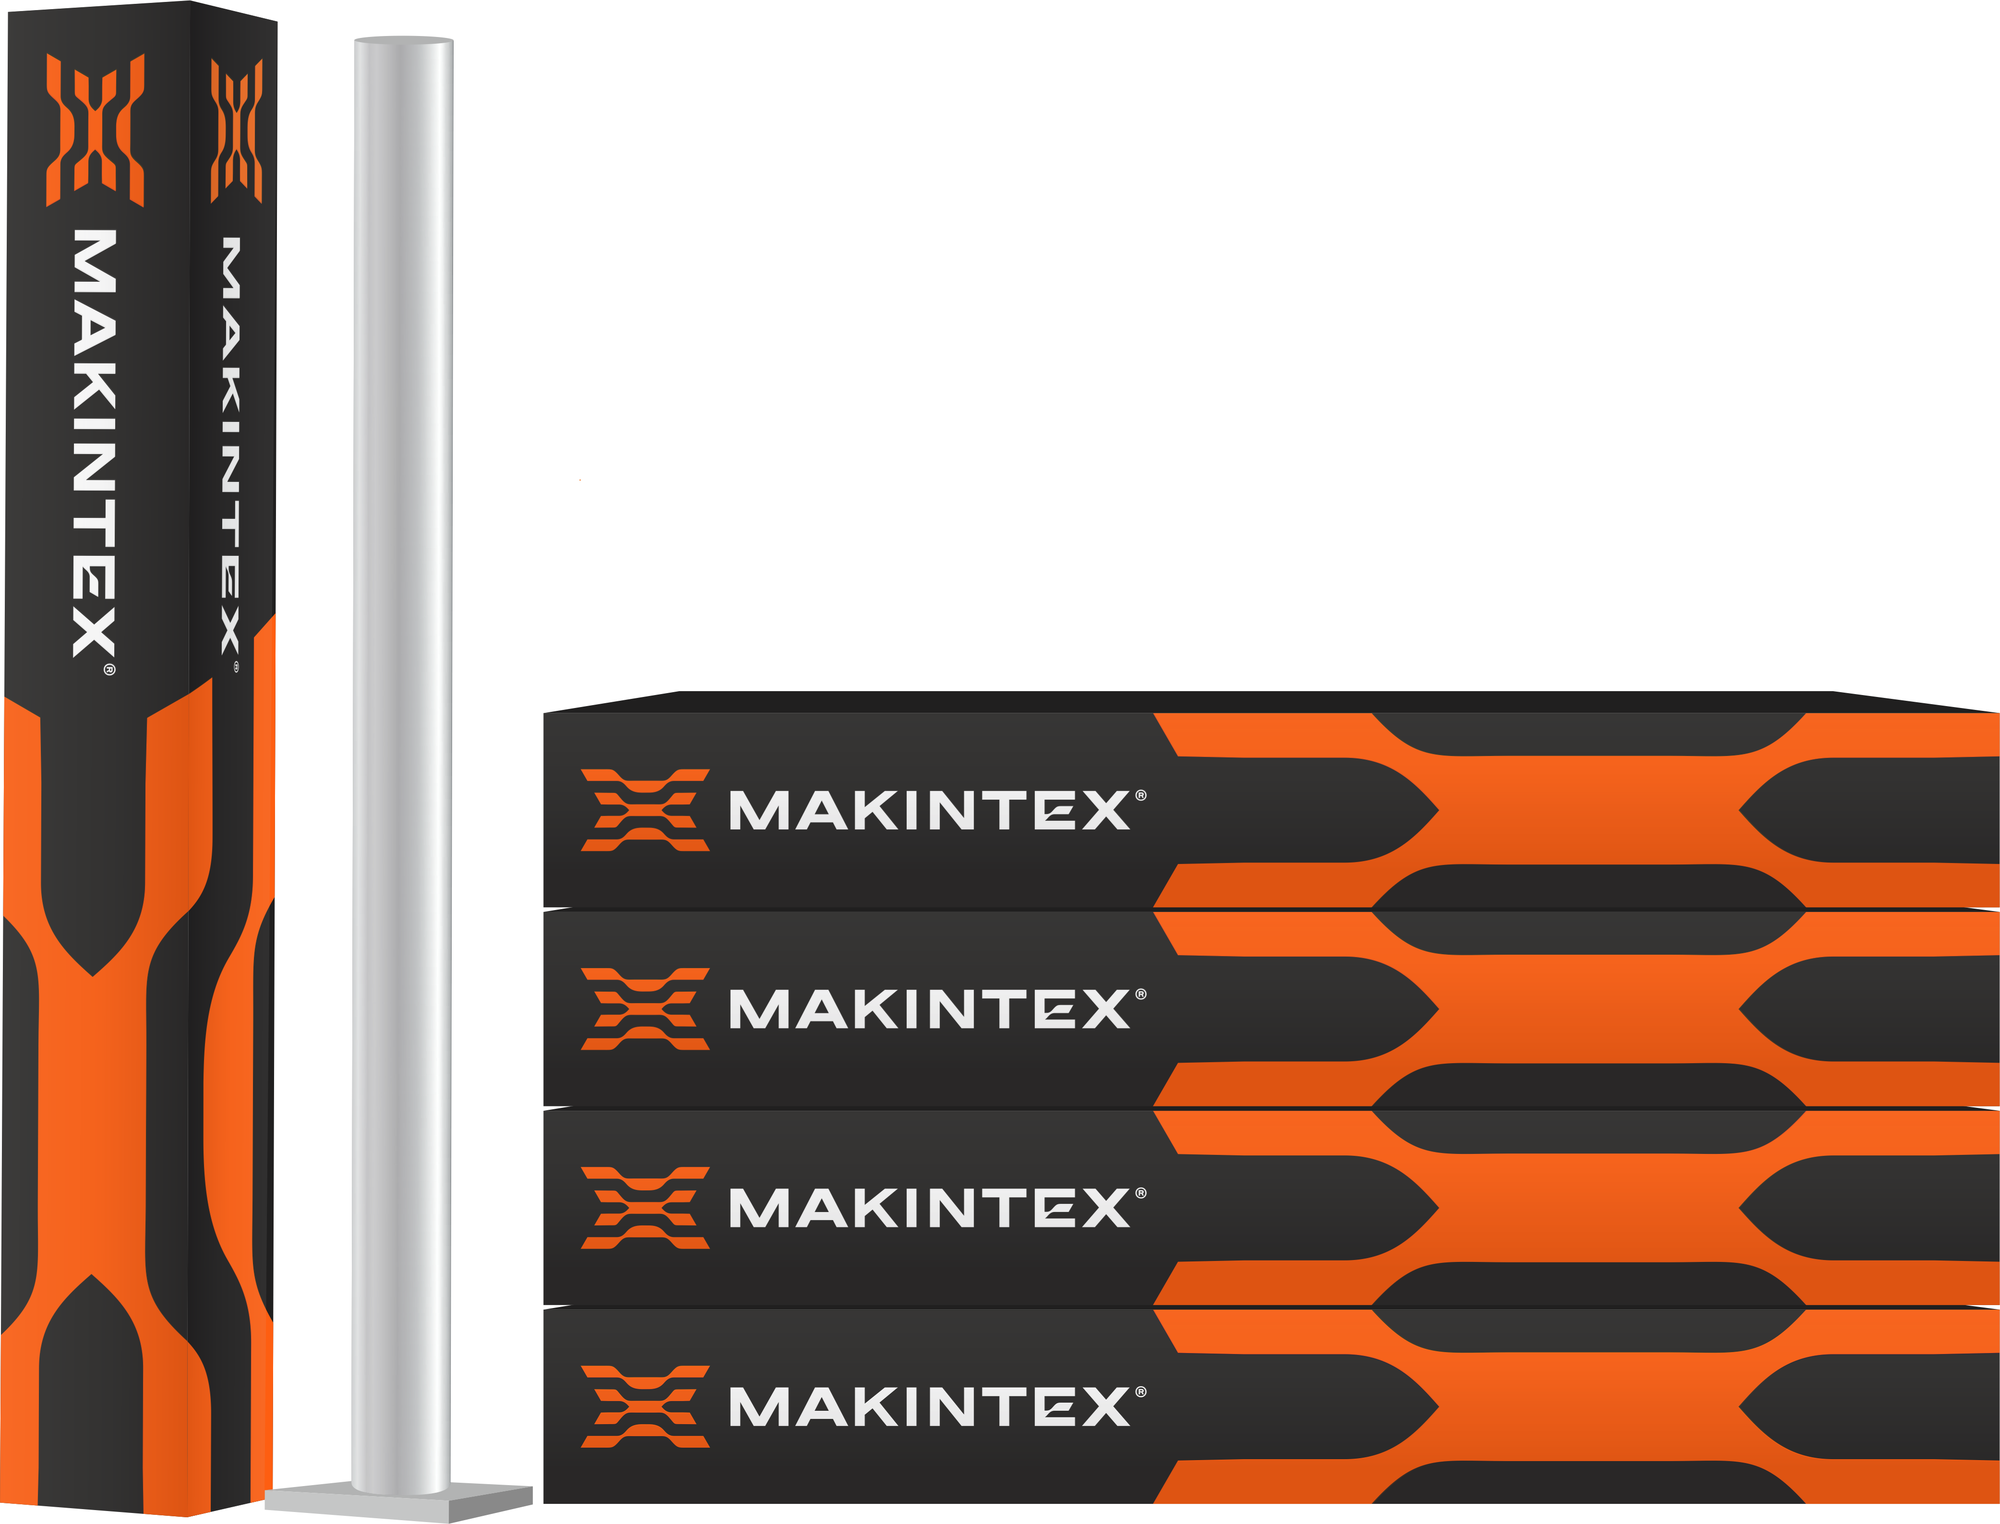 Плёнка защитная антигравийная MAKINTEX SUPERIOR CLEAR 1.52х10 см Прозрачная (полиуретановая) для защиты кузова от царапин и сколов.